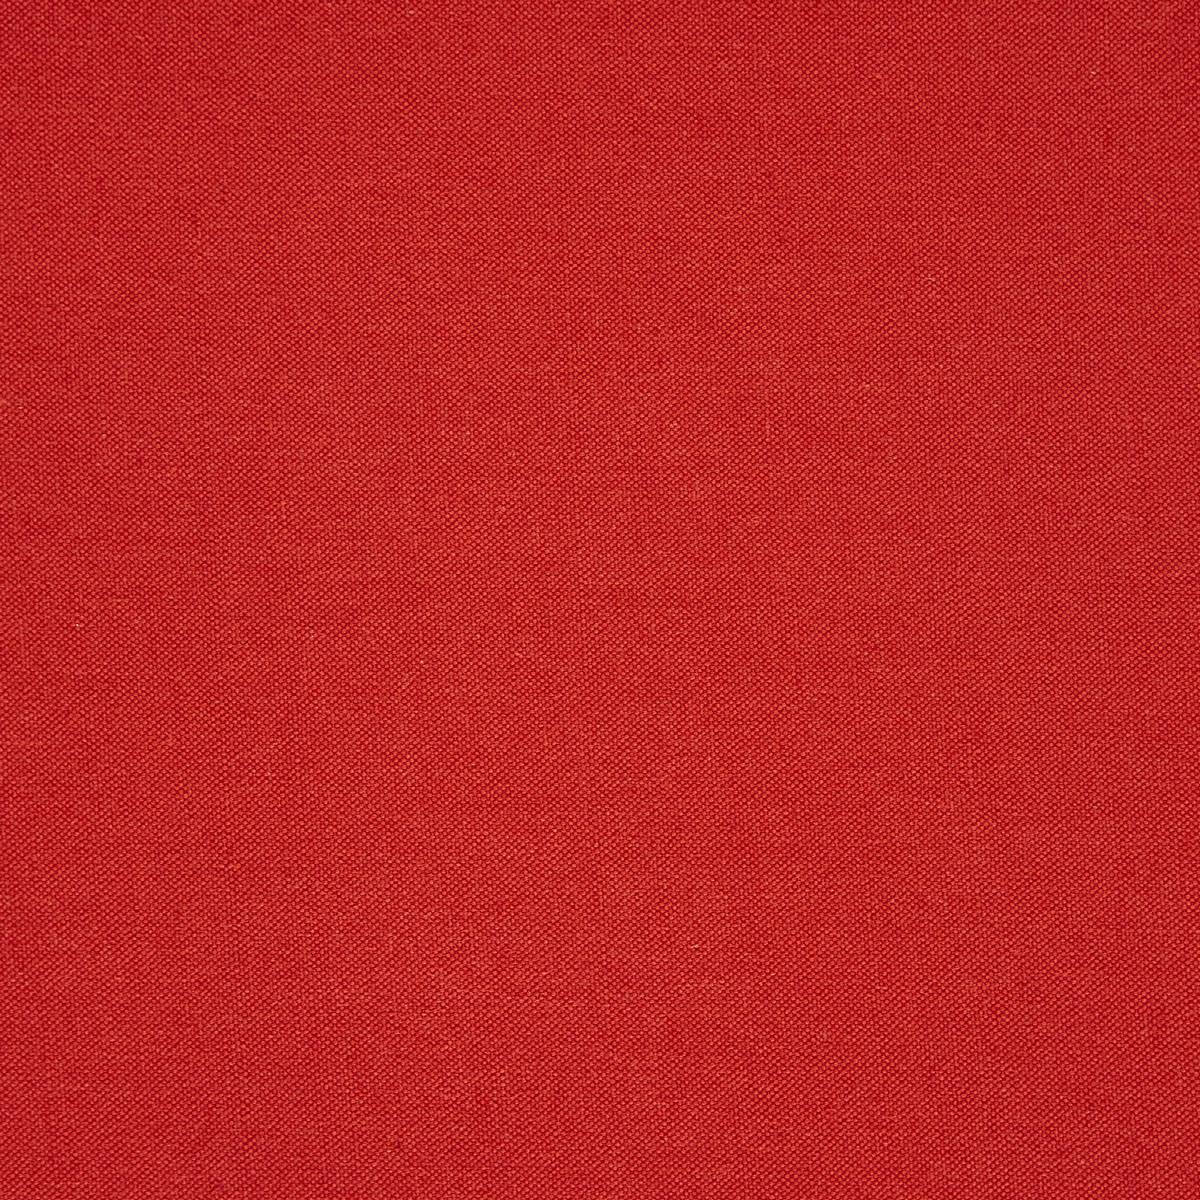 Altea Scarlet Fabric by Prestigious Textiles